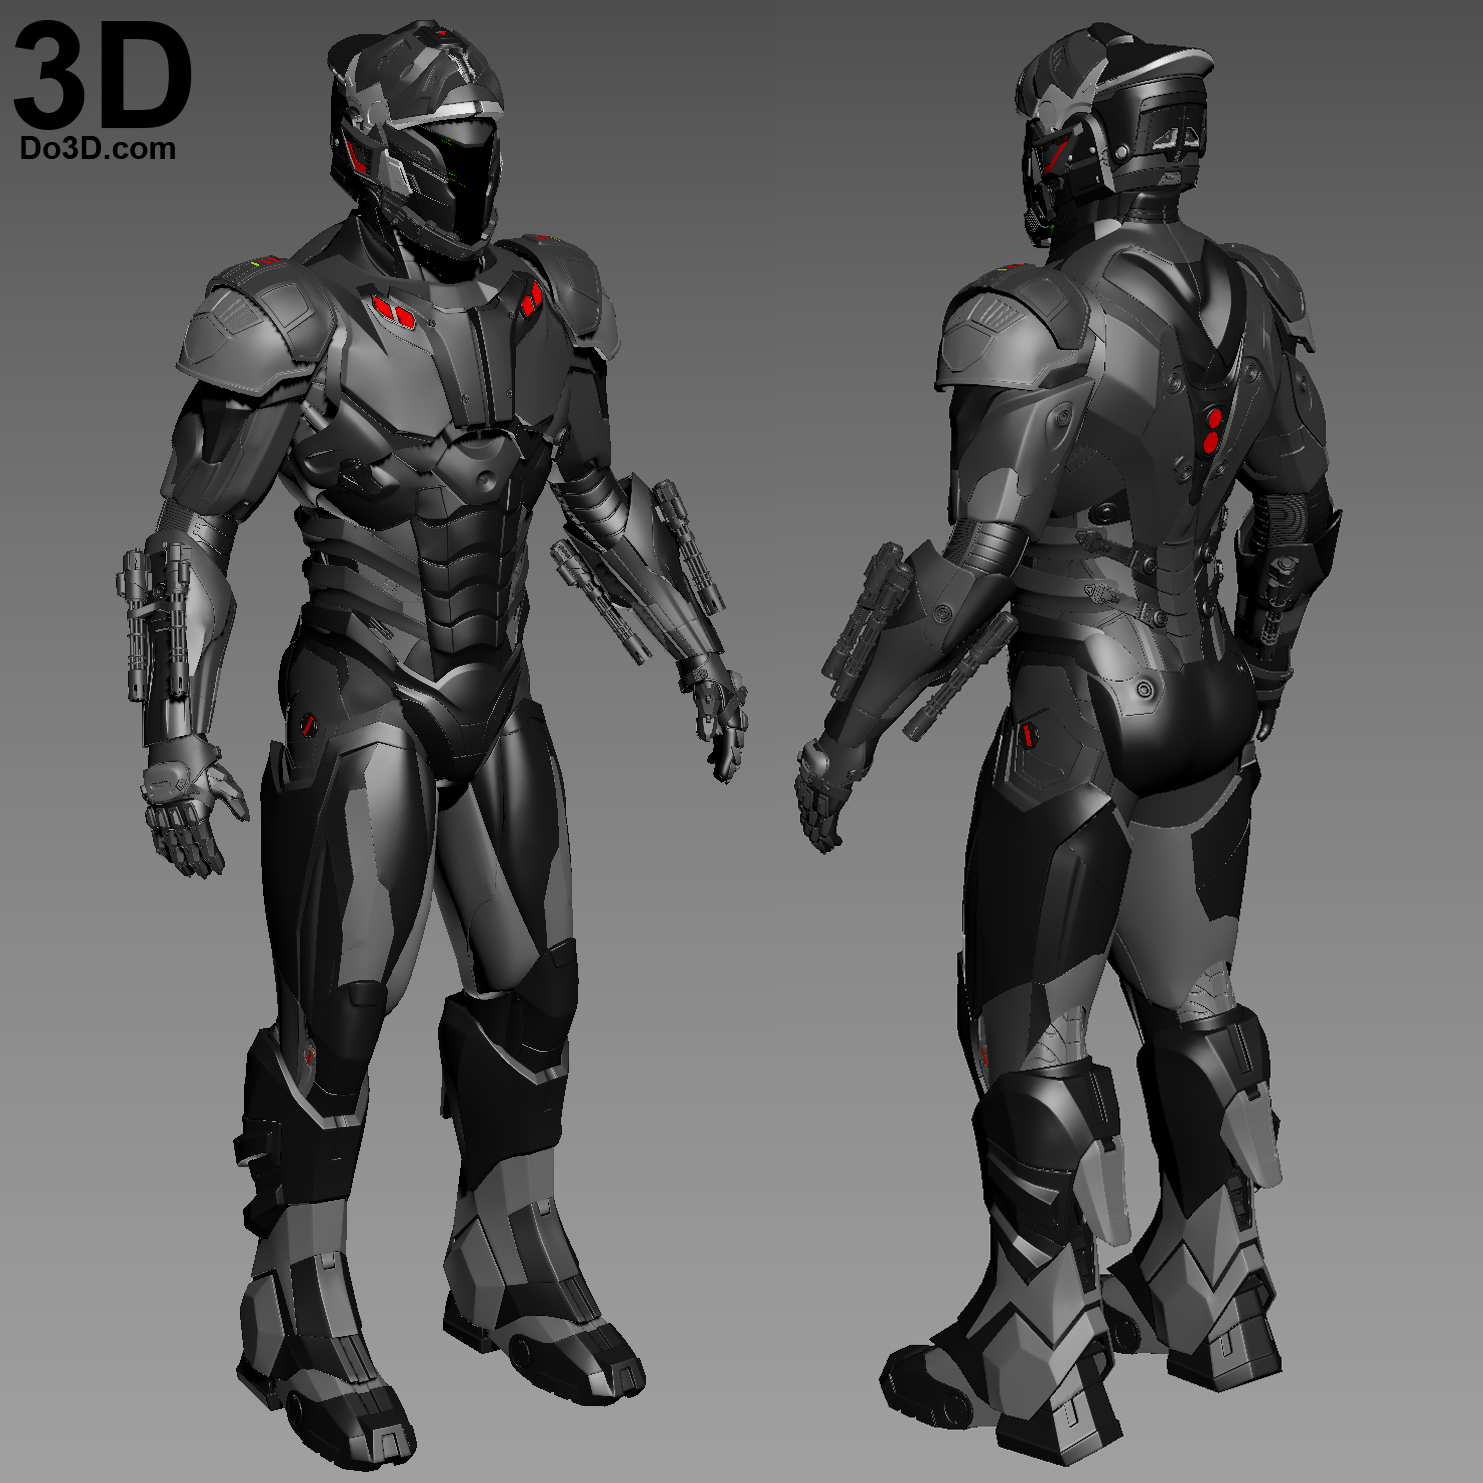 3D Model: Armor (Robot Design Concept by Do3D) | Print File Format: – Do3D Portfolio